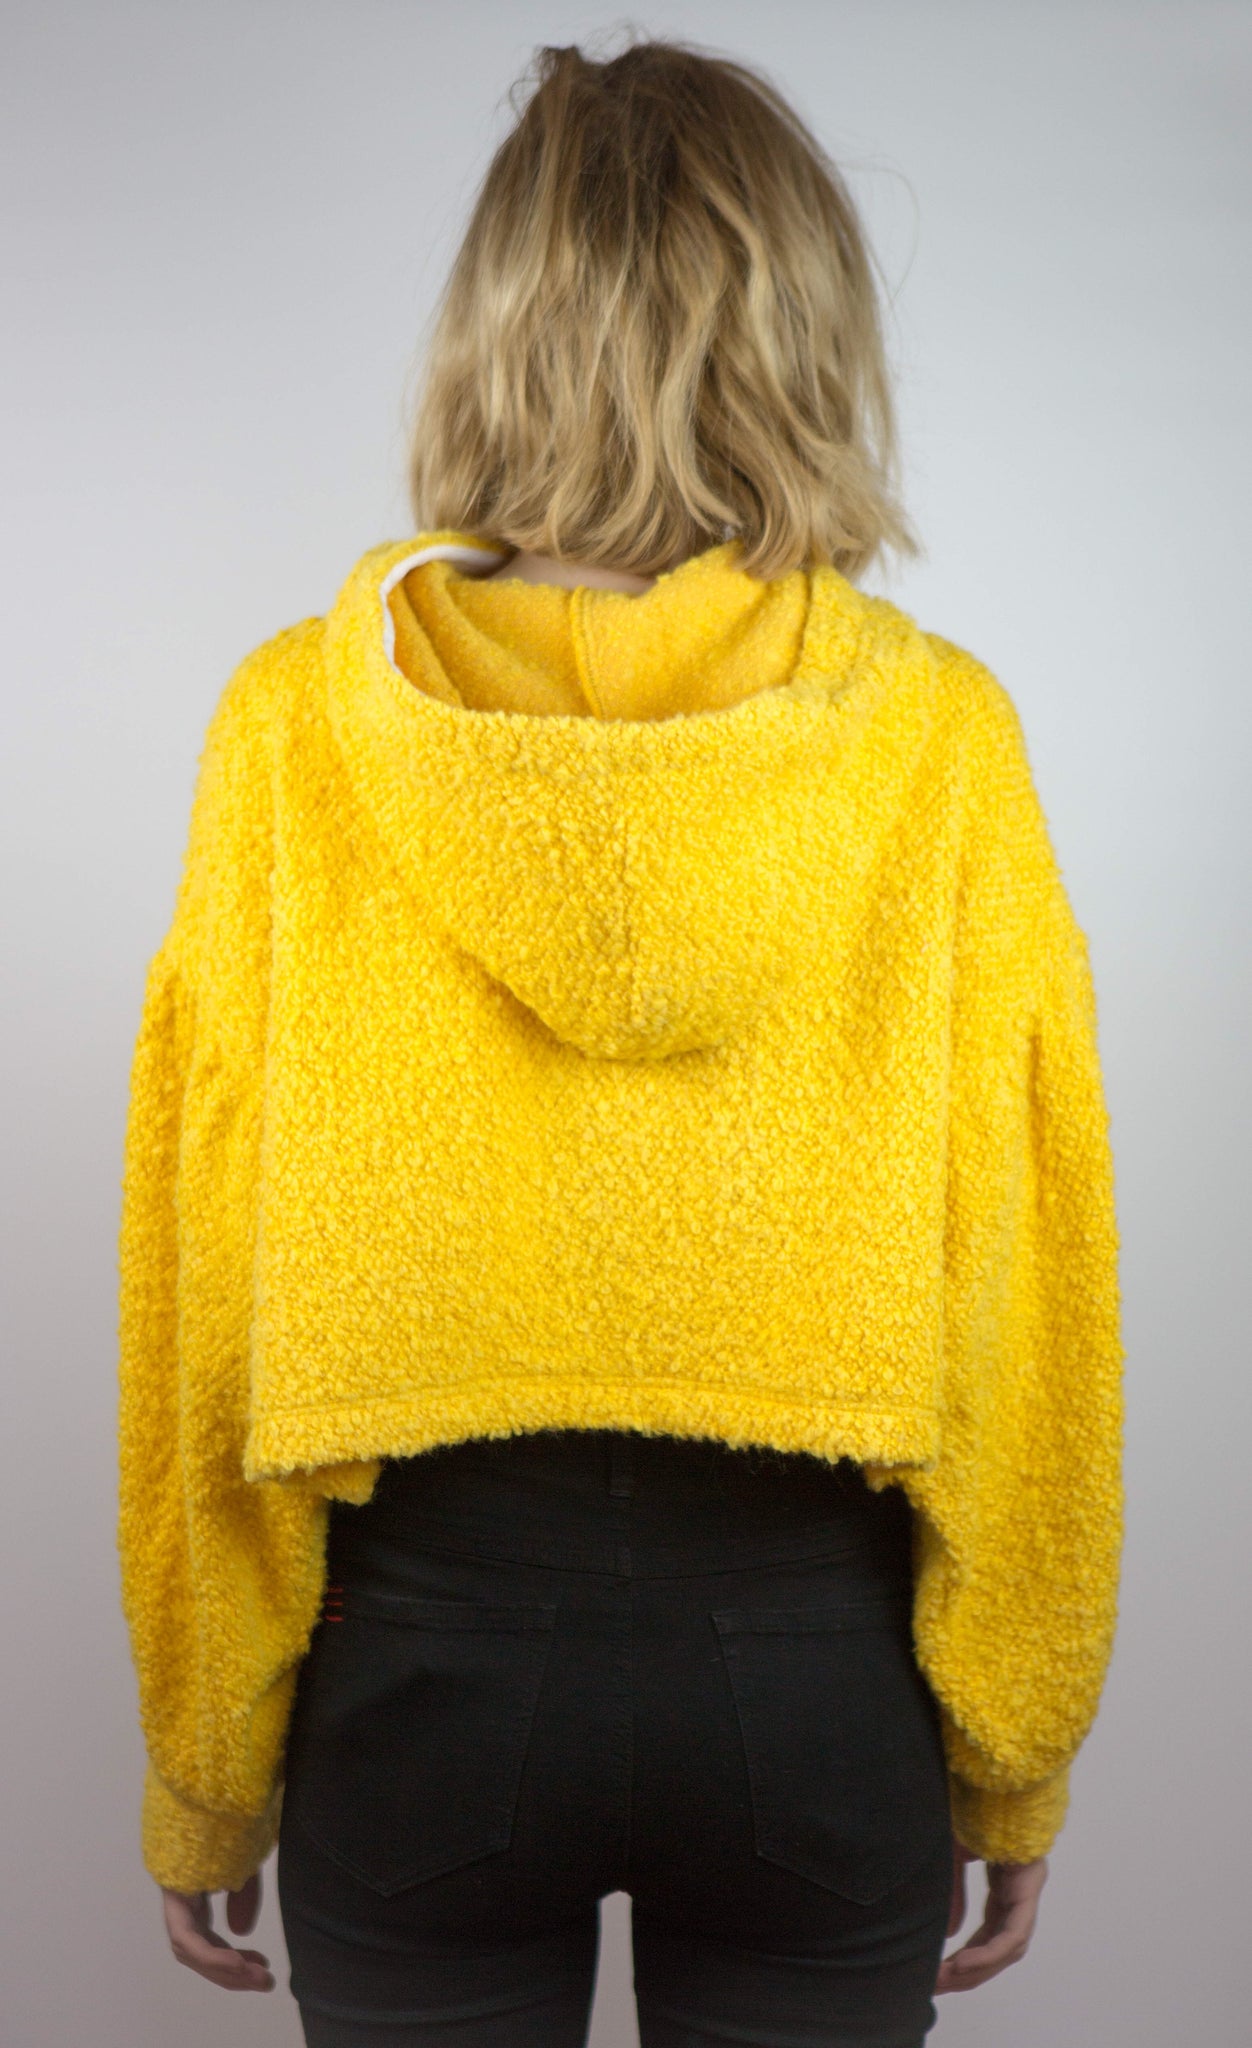 fluffy yellow hoodie